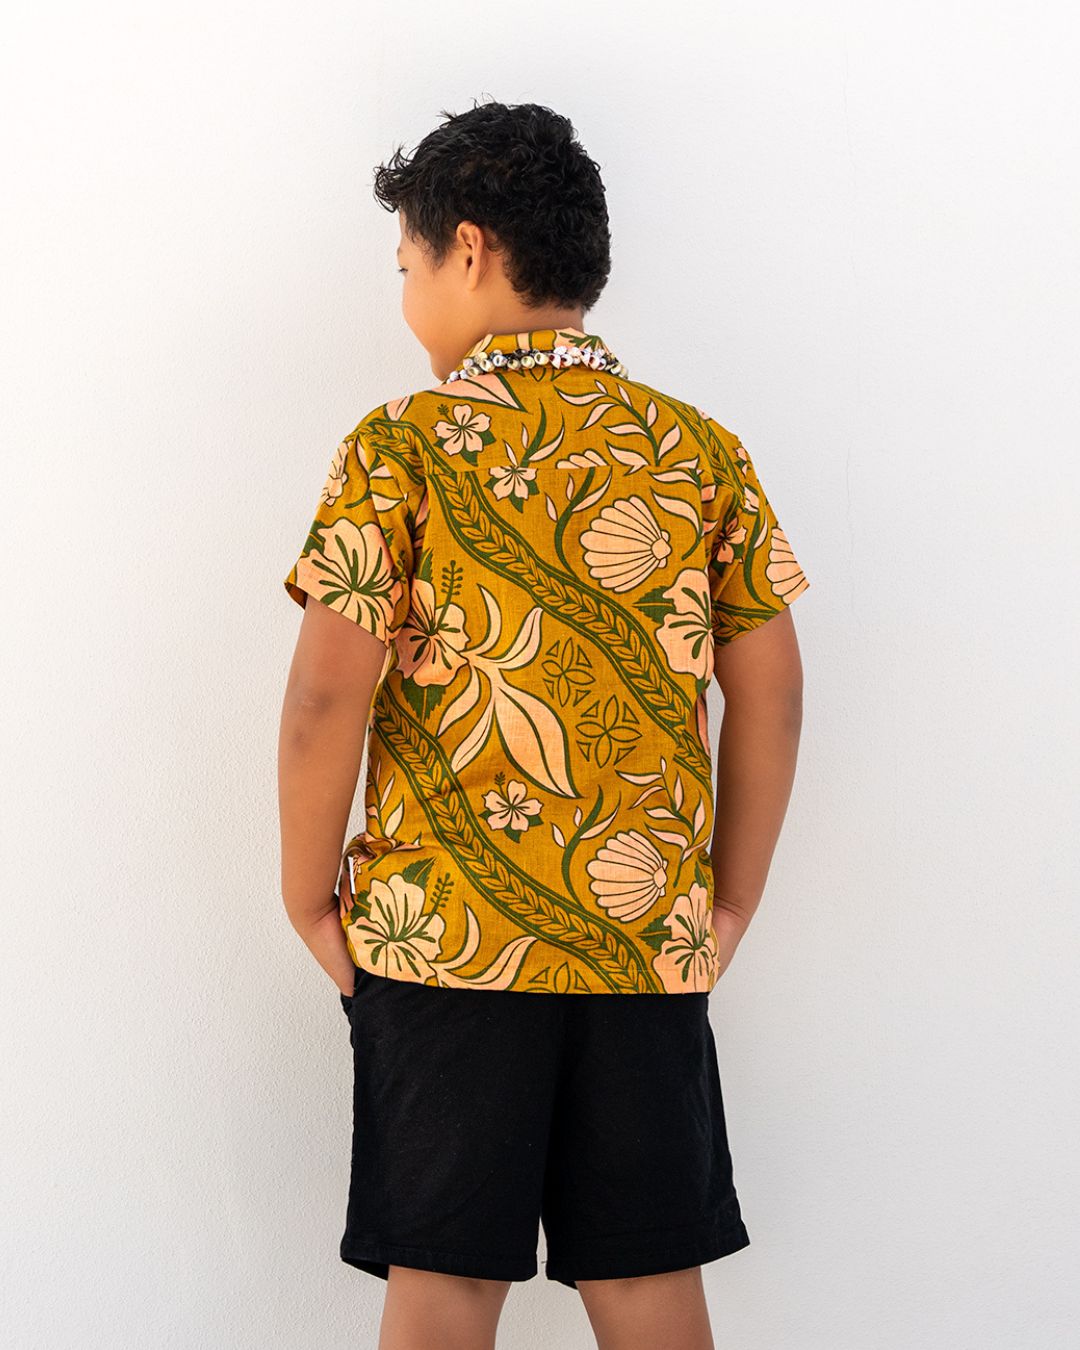 Kanoa Teen Short Sleeve Island Shirt - Island Vines Gold